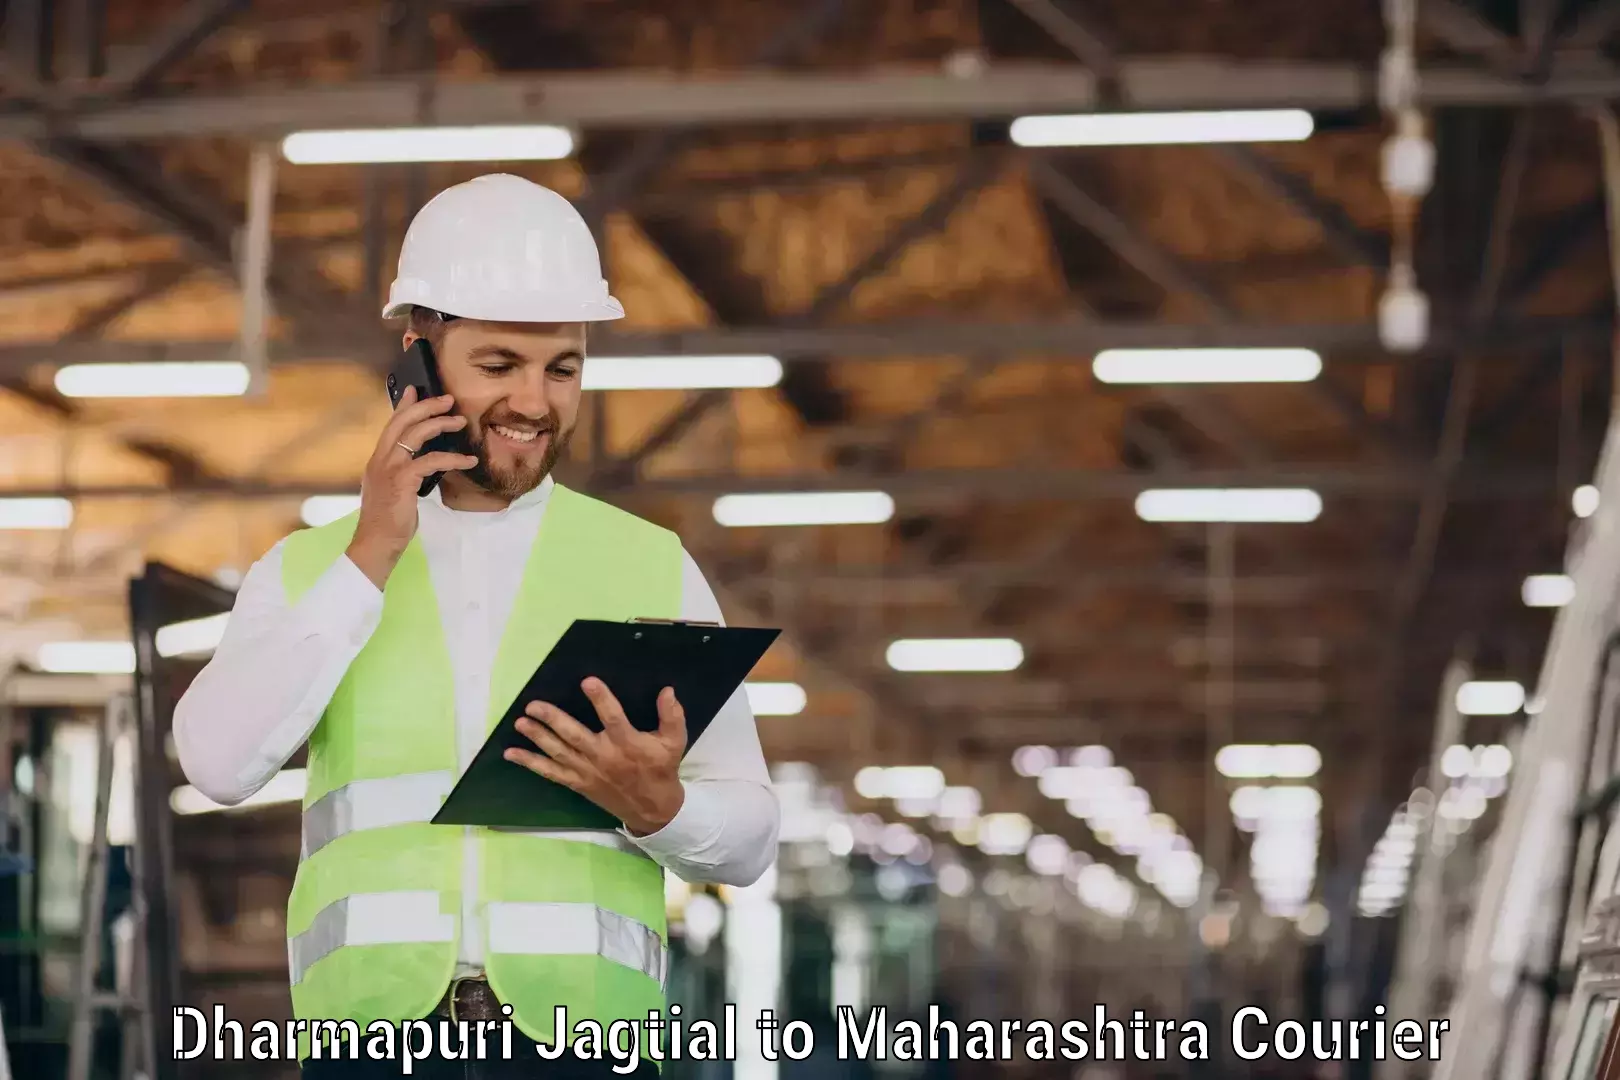 Full-service courier options Dharmapuri Jagtial to Shindkheda